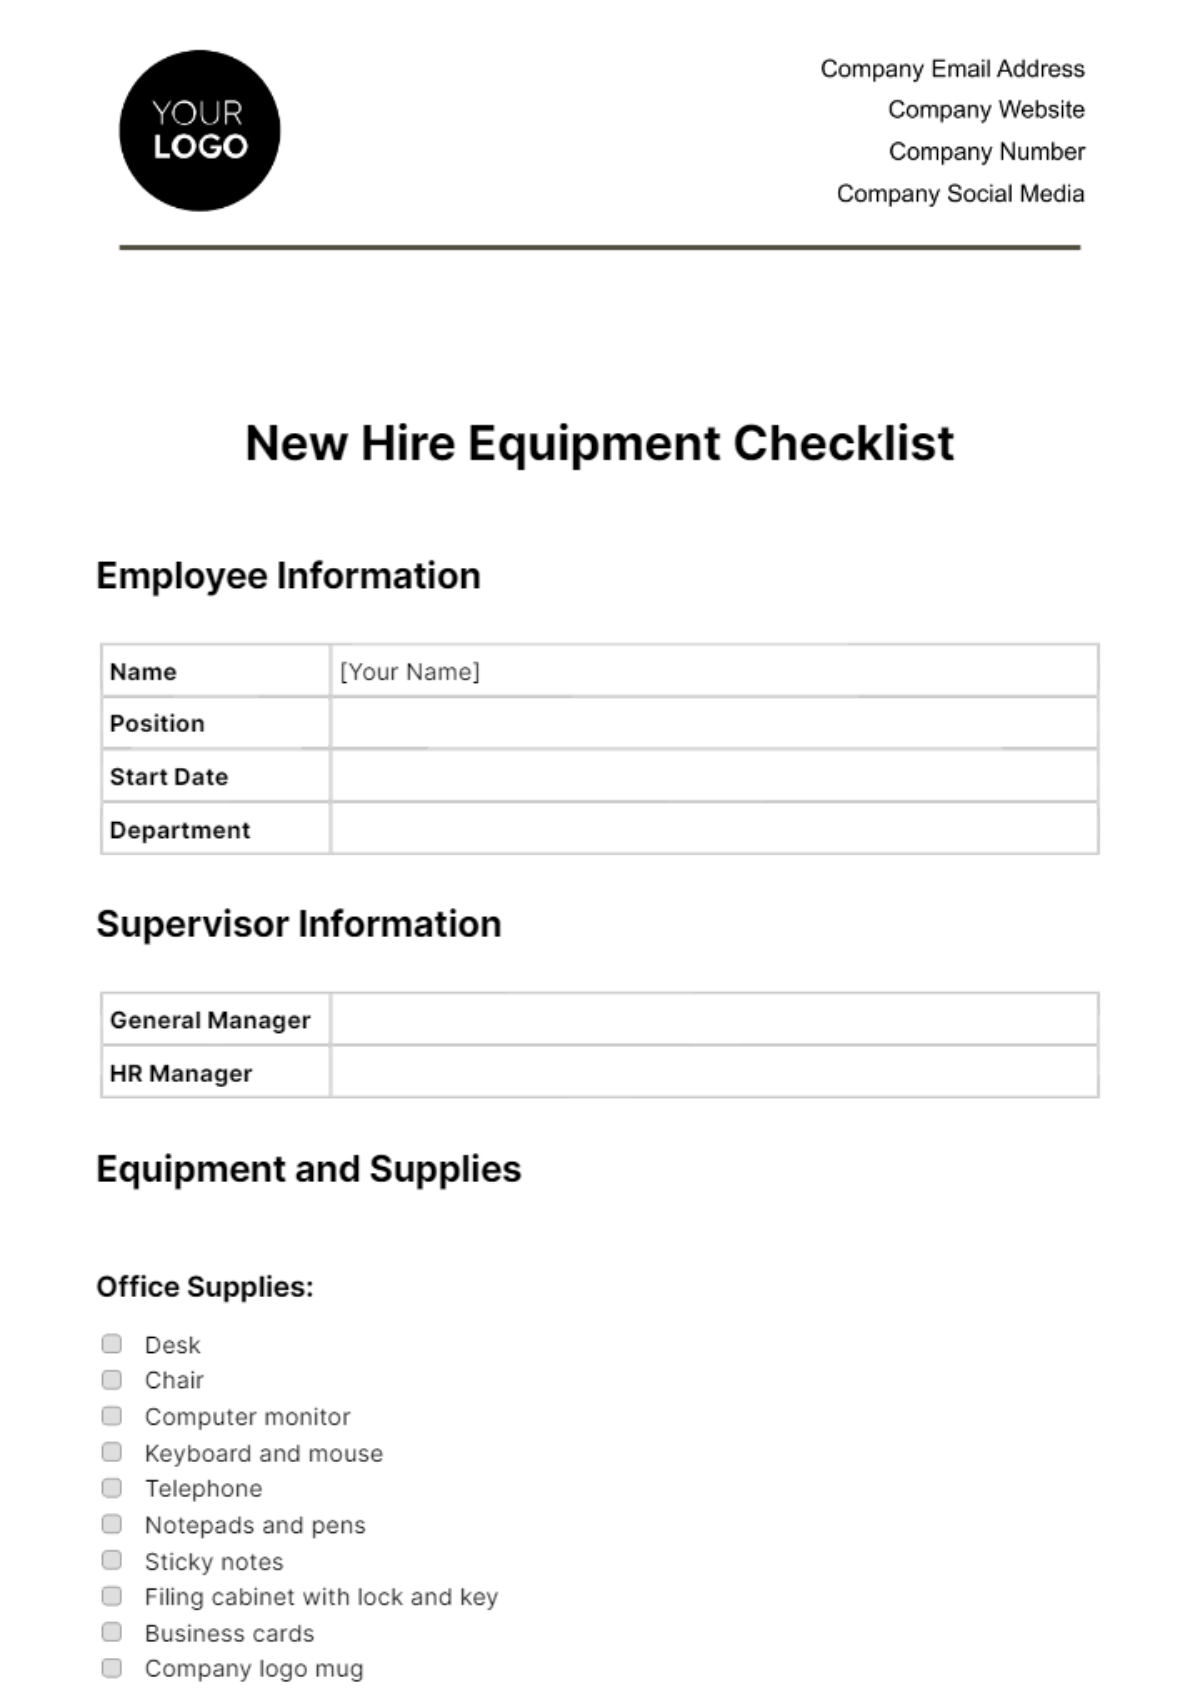 Free New Hire Equipment Checklist HR Template